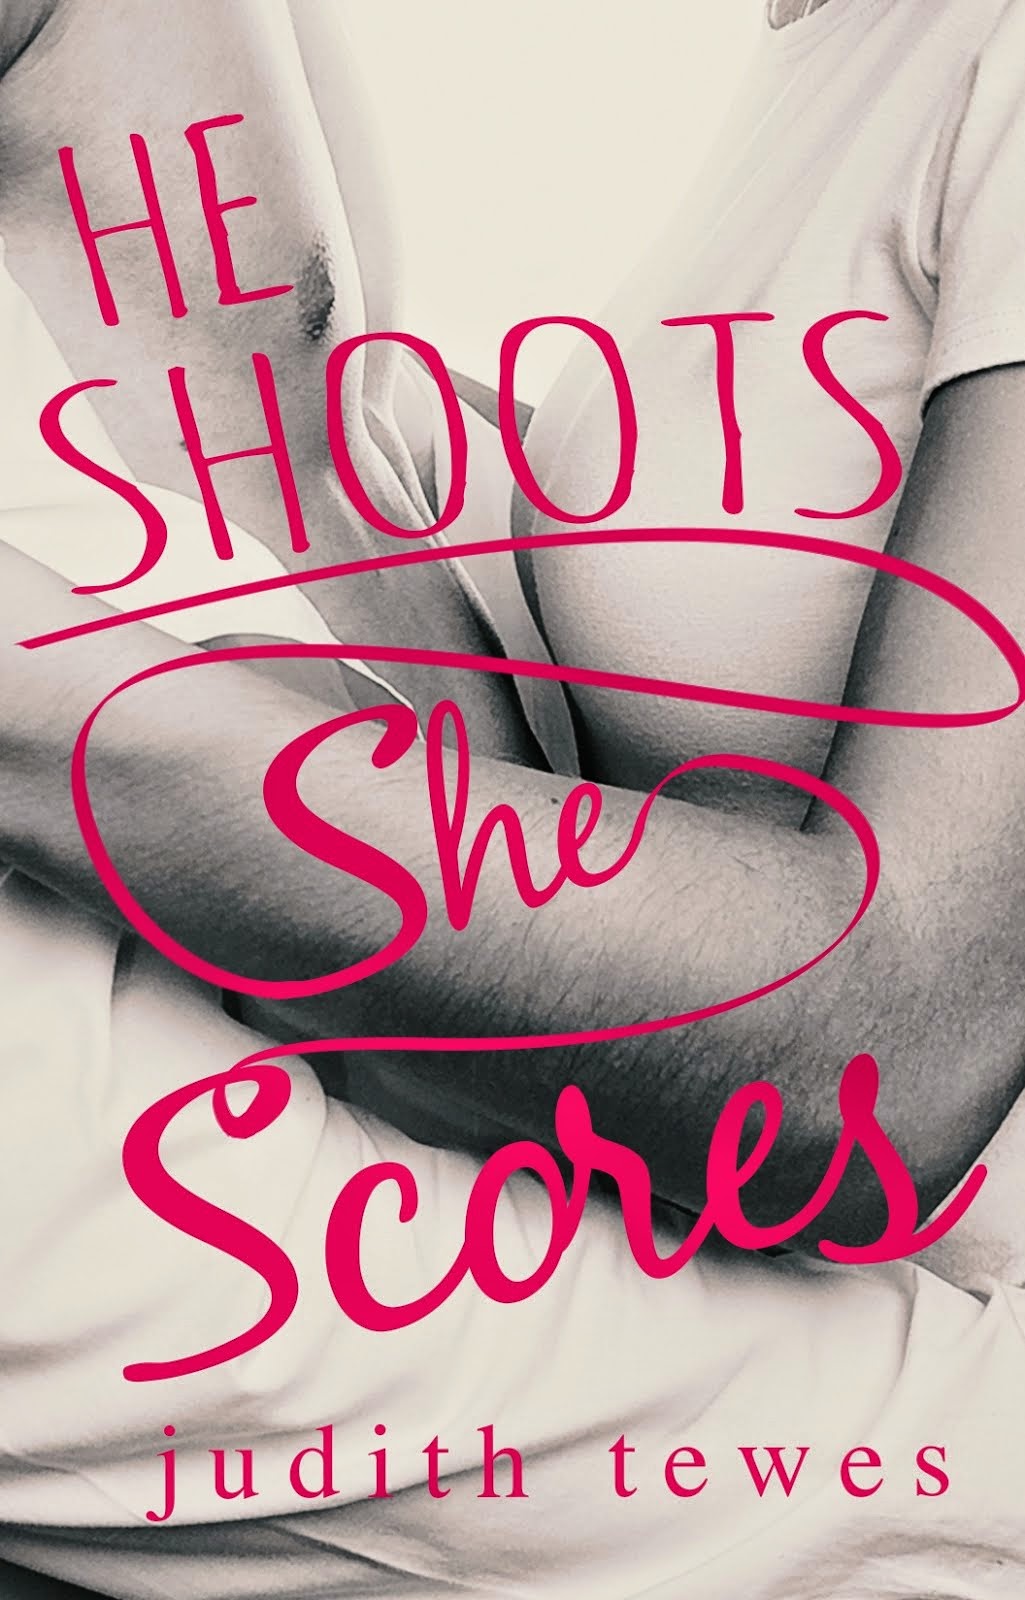 He Shoots, She Scores